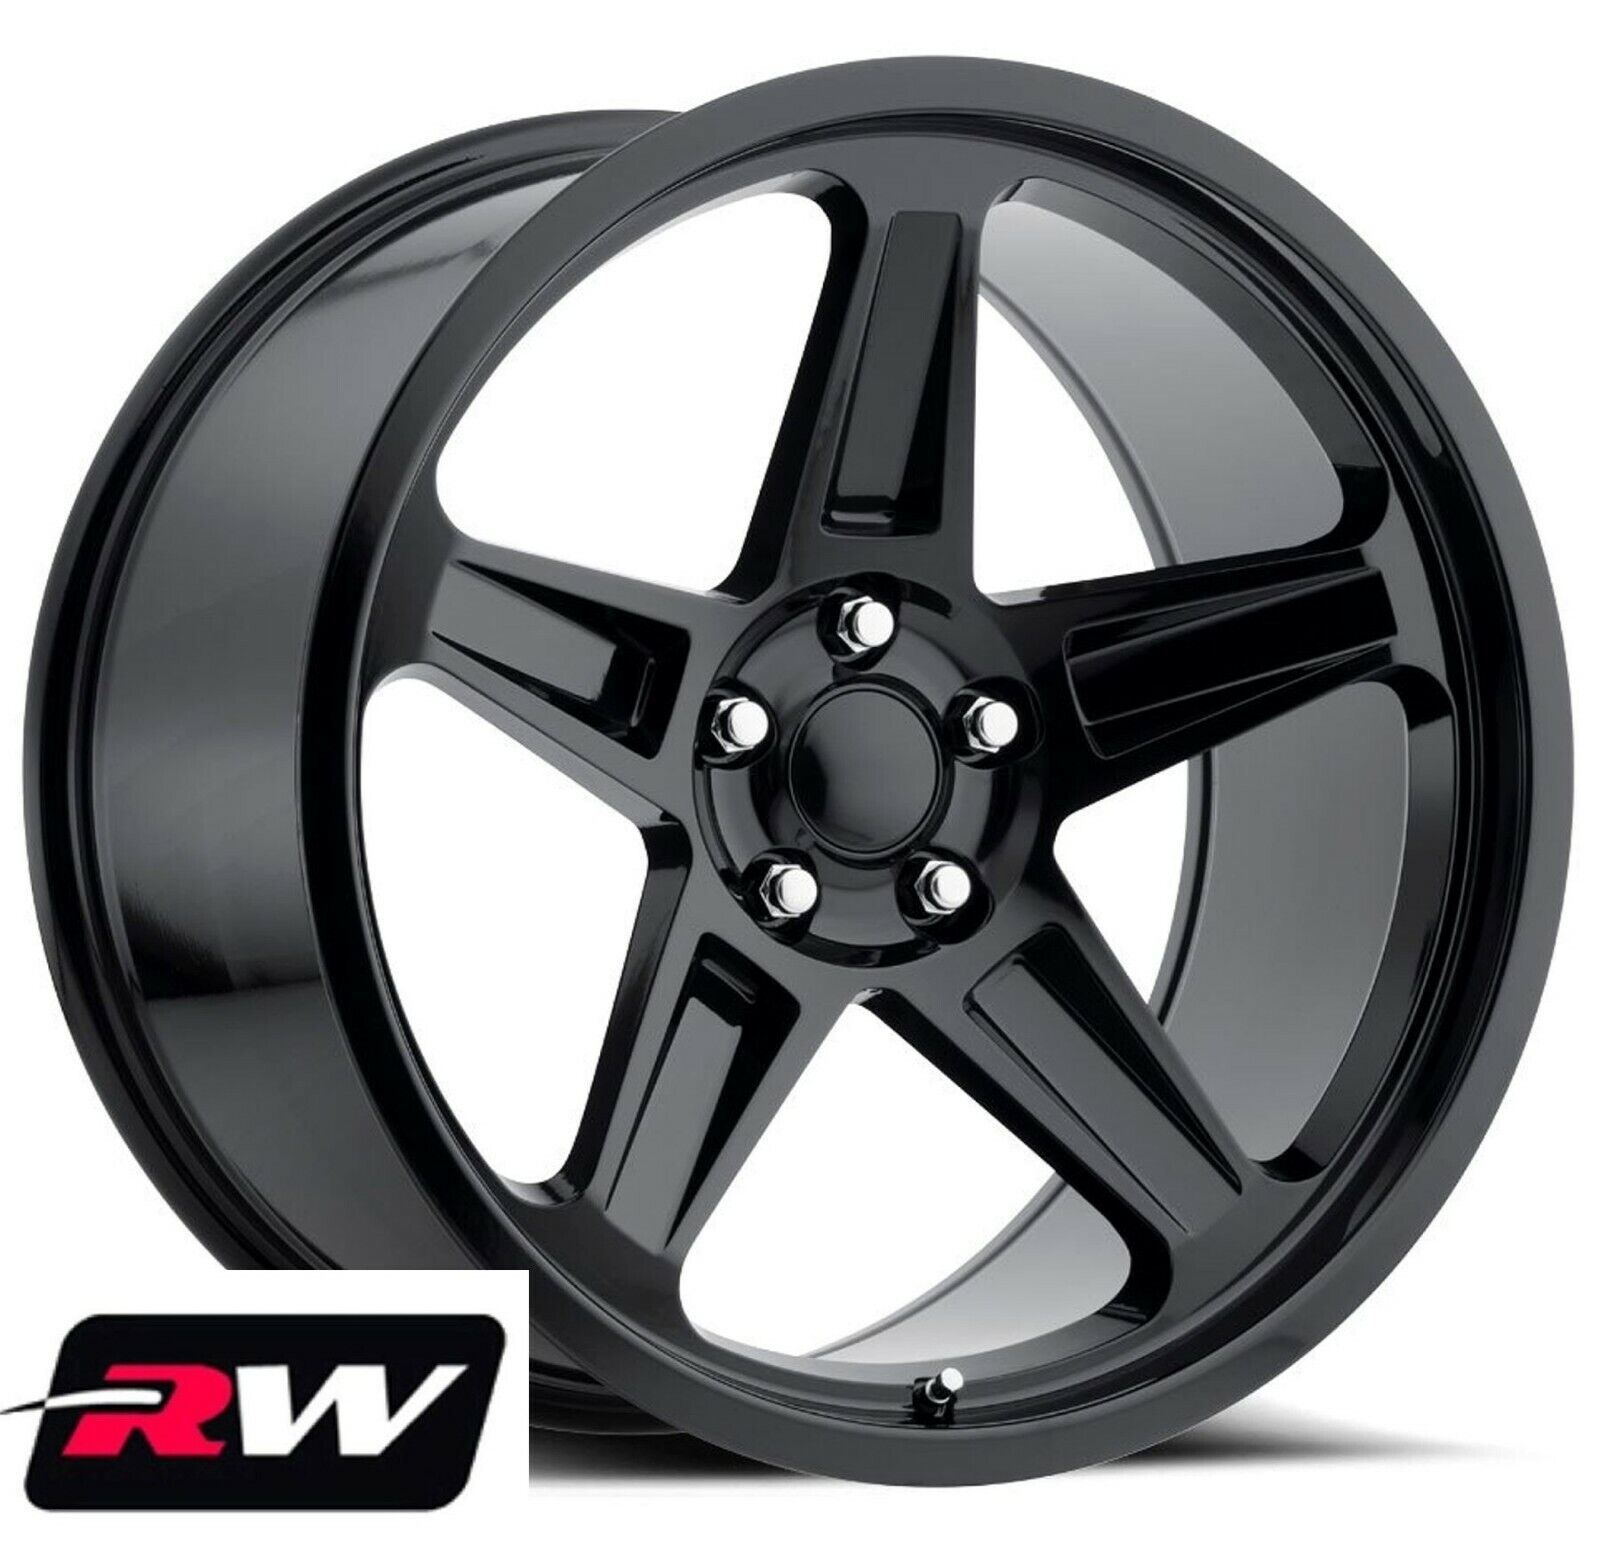 20x9.5 / 20x10.5 fits Challenger SRT Demon Style Wheels Gloss Black Rims